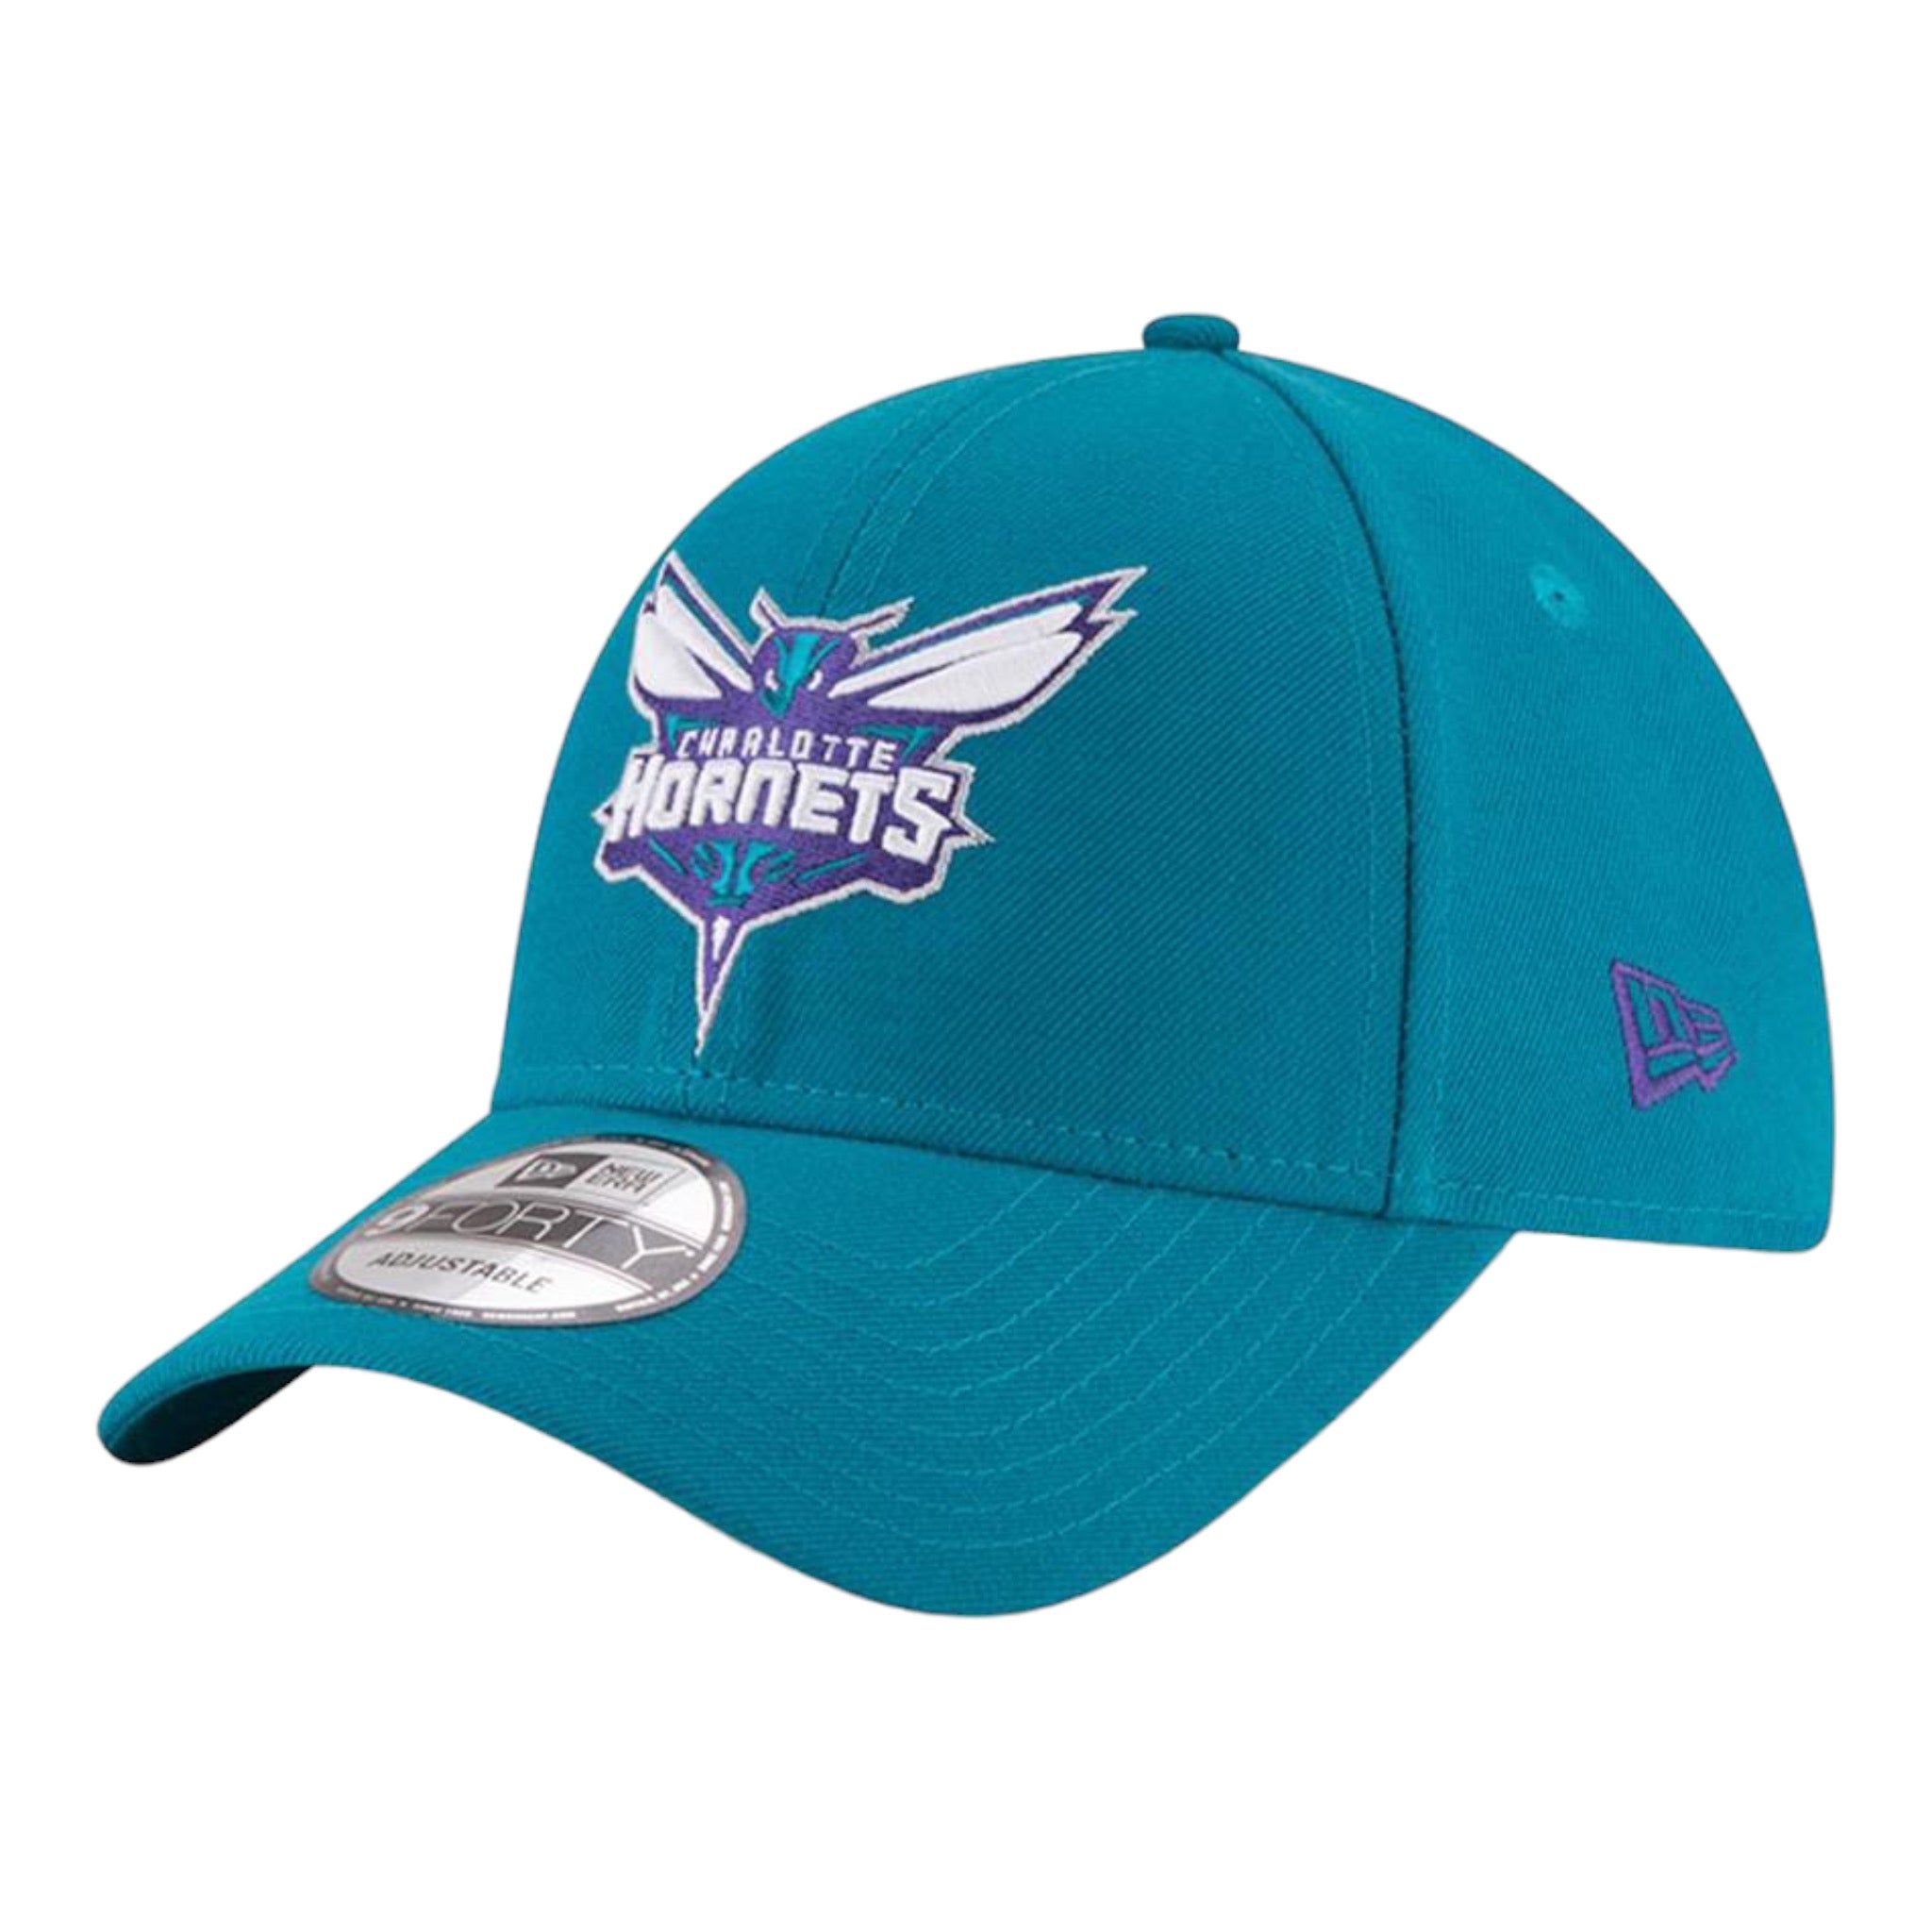 Cappello Adulto Uomo The League Charlotte Hornets New Era